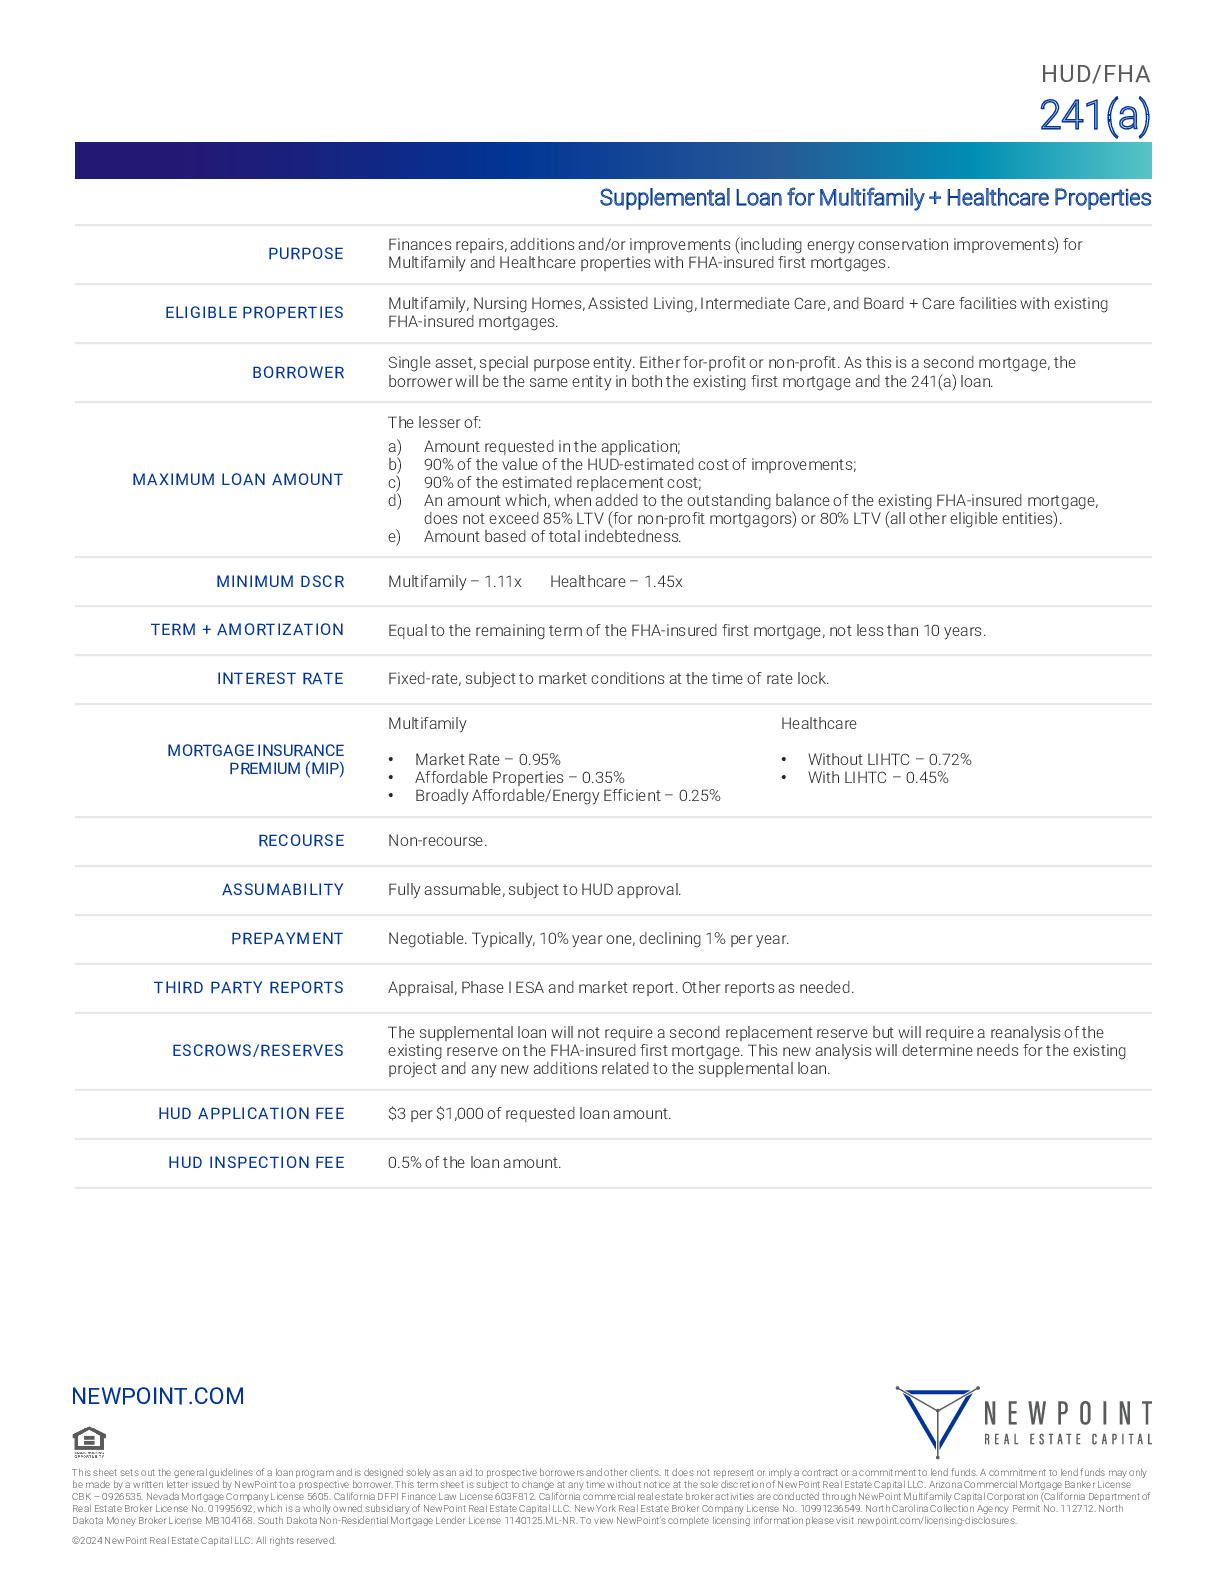 NewPoint_HUD-FHA_241(a).pdf